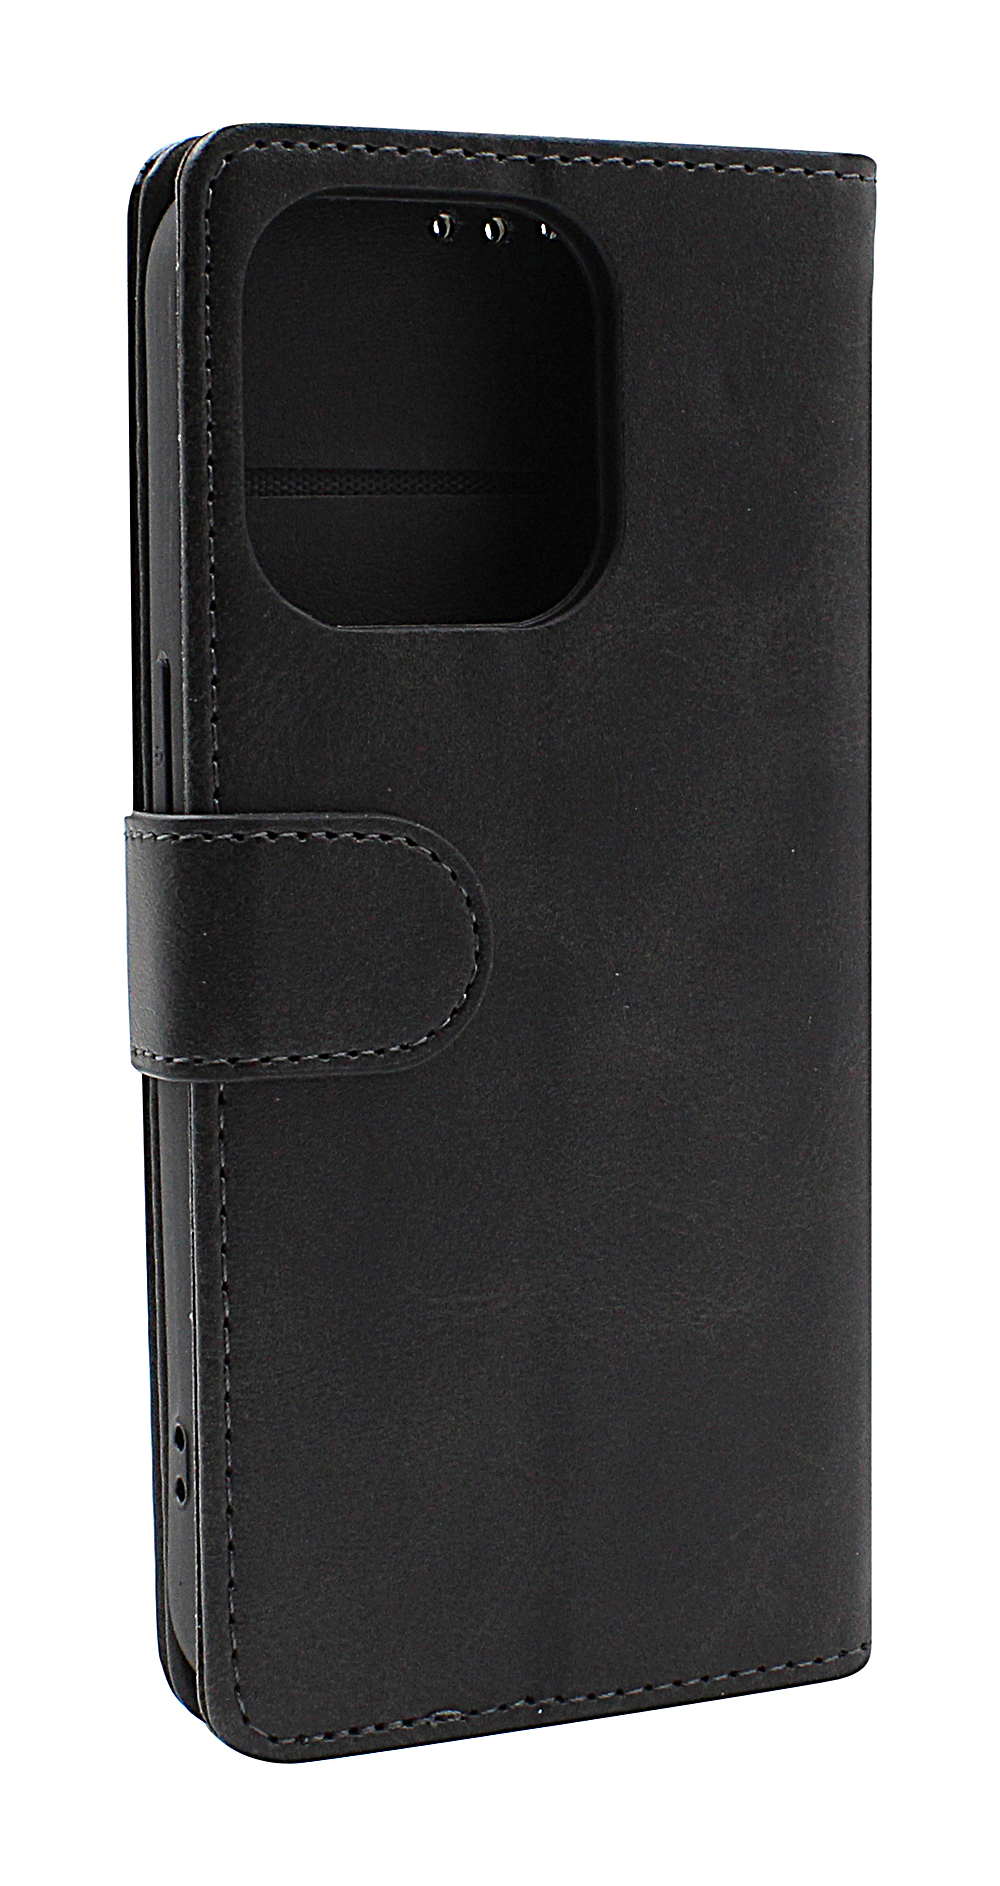 billigamobilskydd.seZipper Standcase Wallet iPhone 14 Pro (6.1)